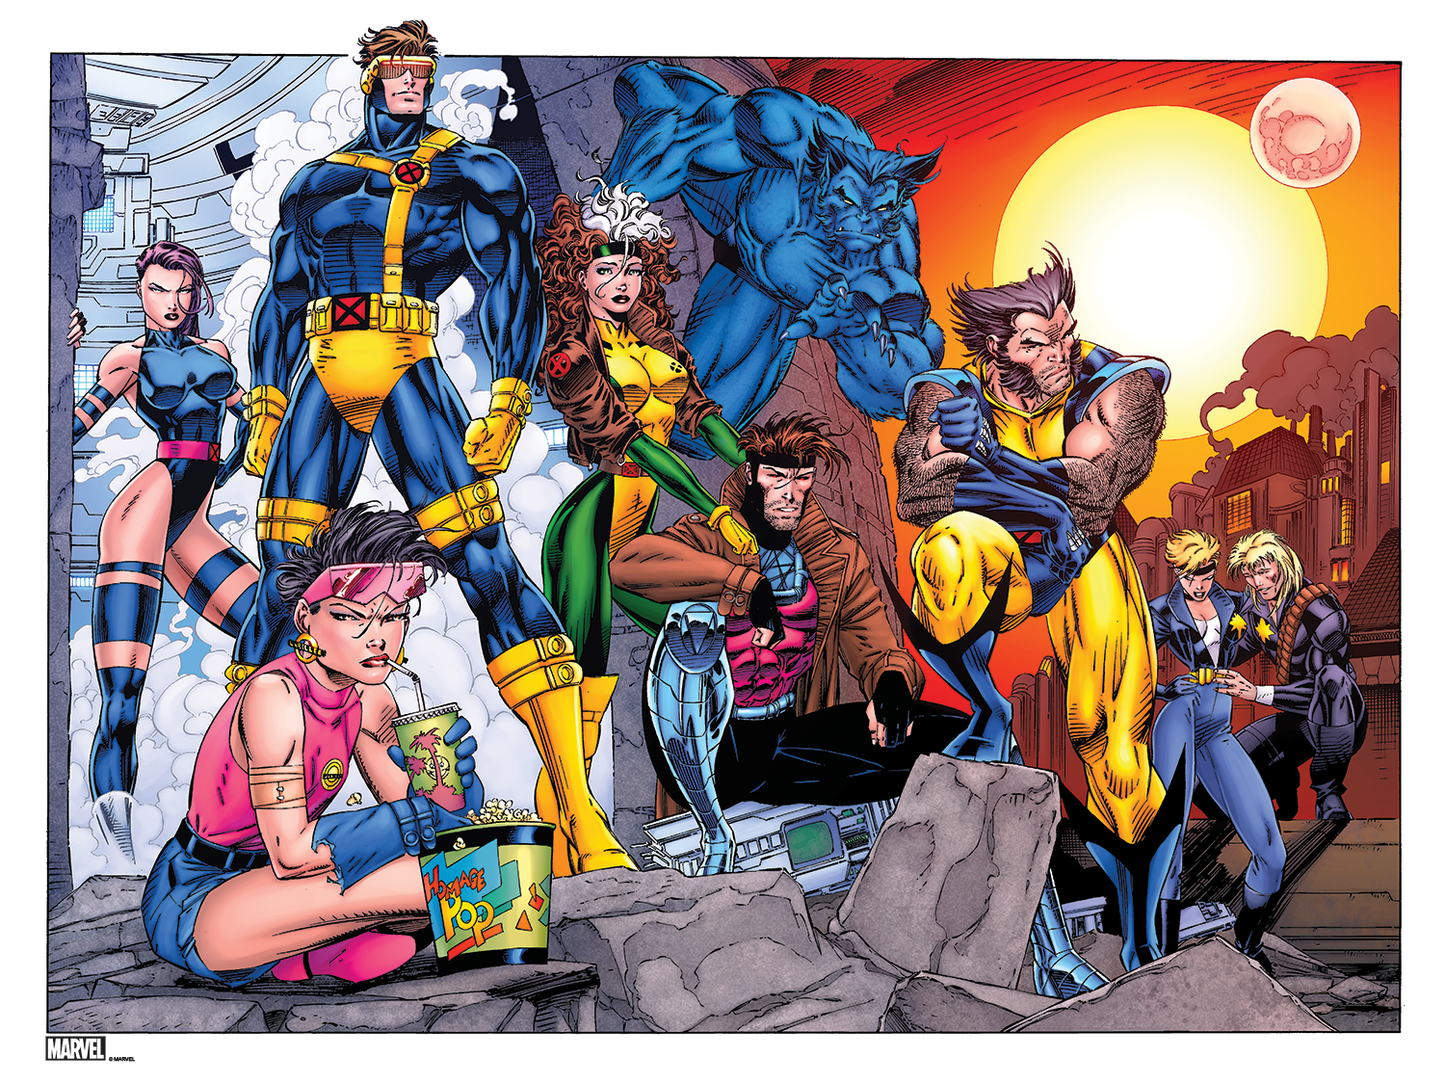 Jim Lee "Astonishing X-Men #1 Cover"